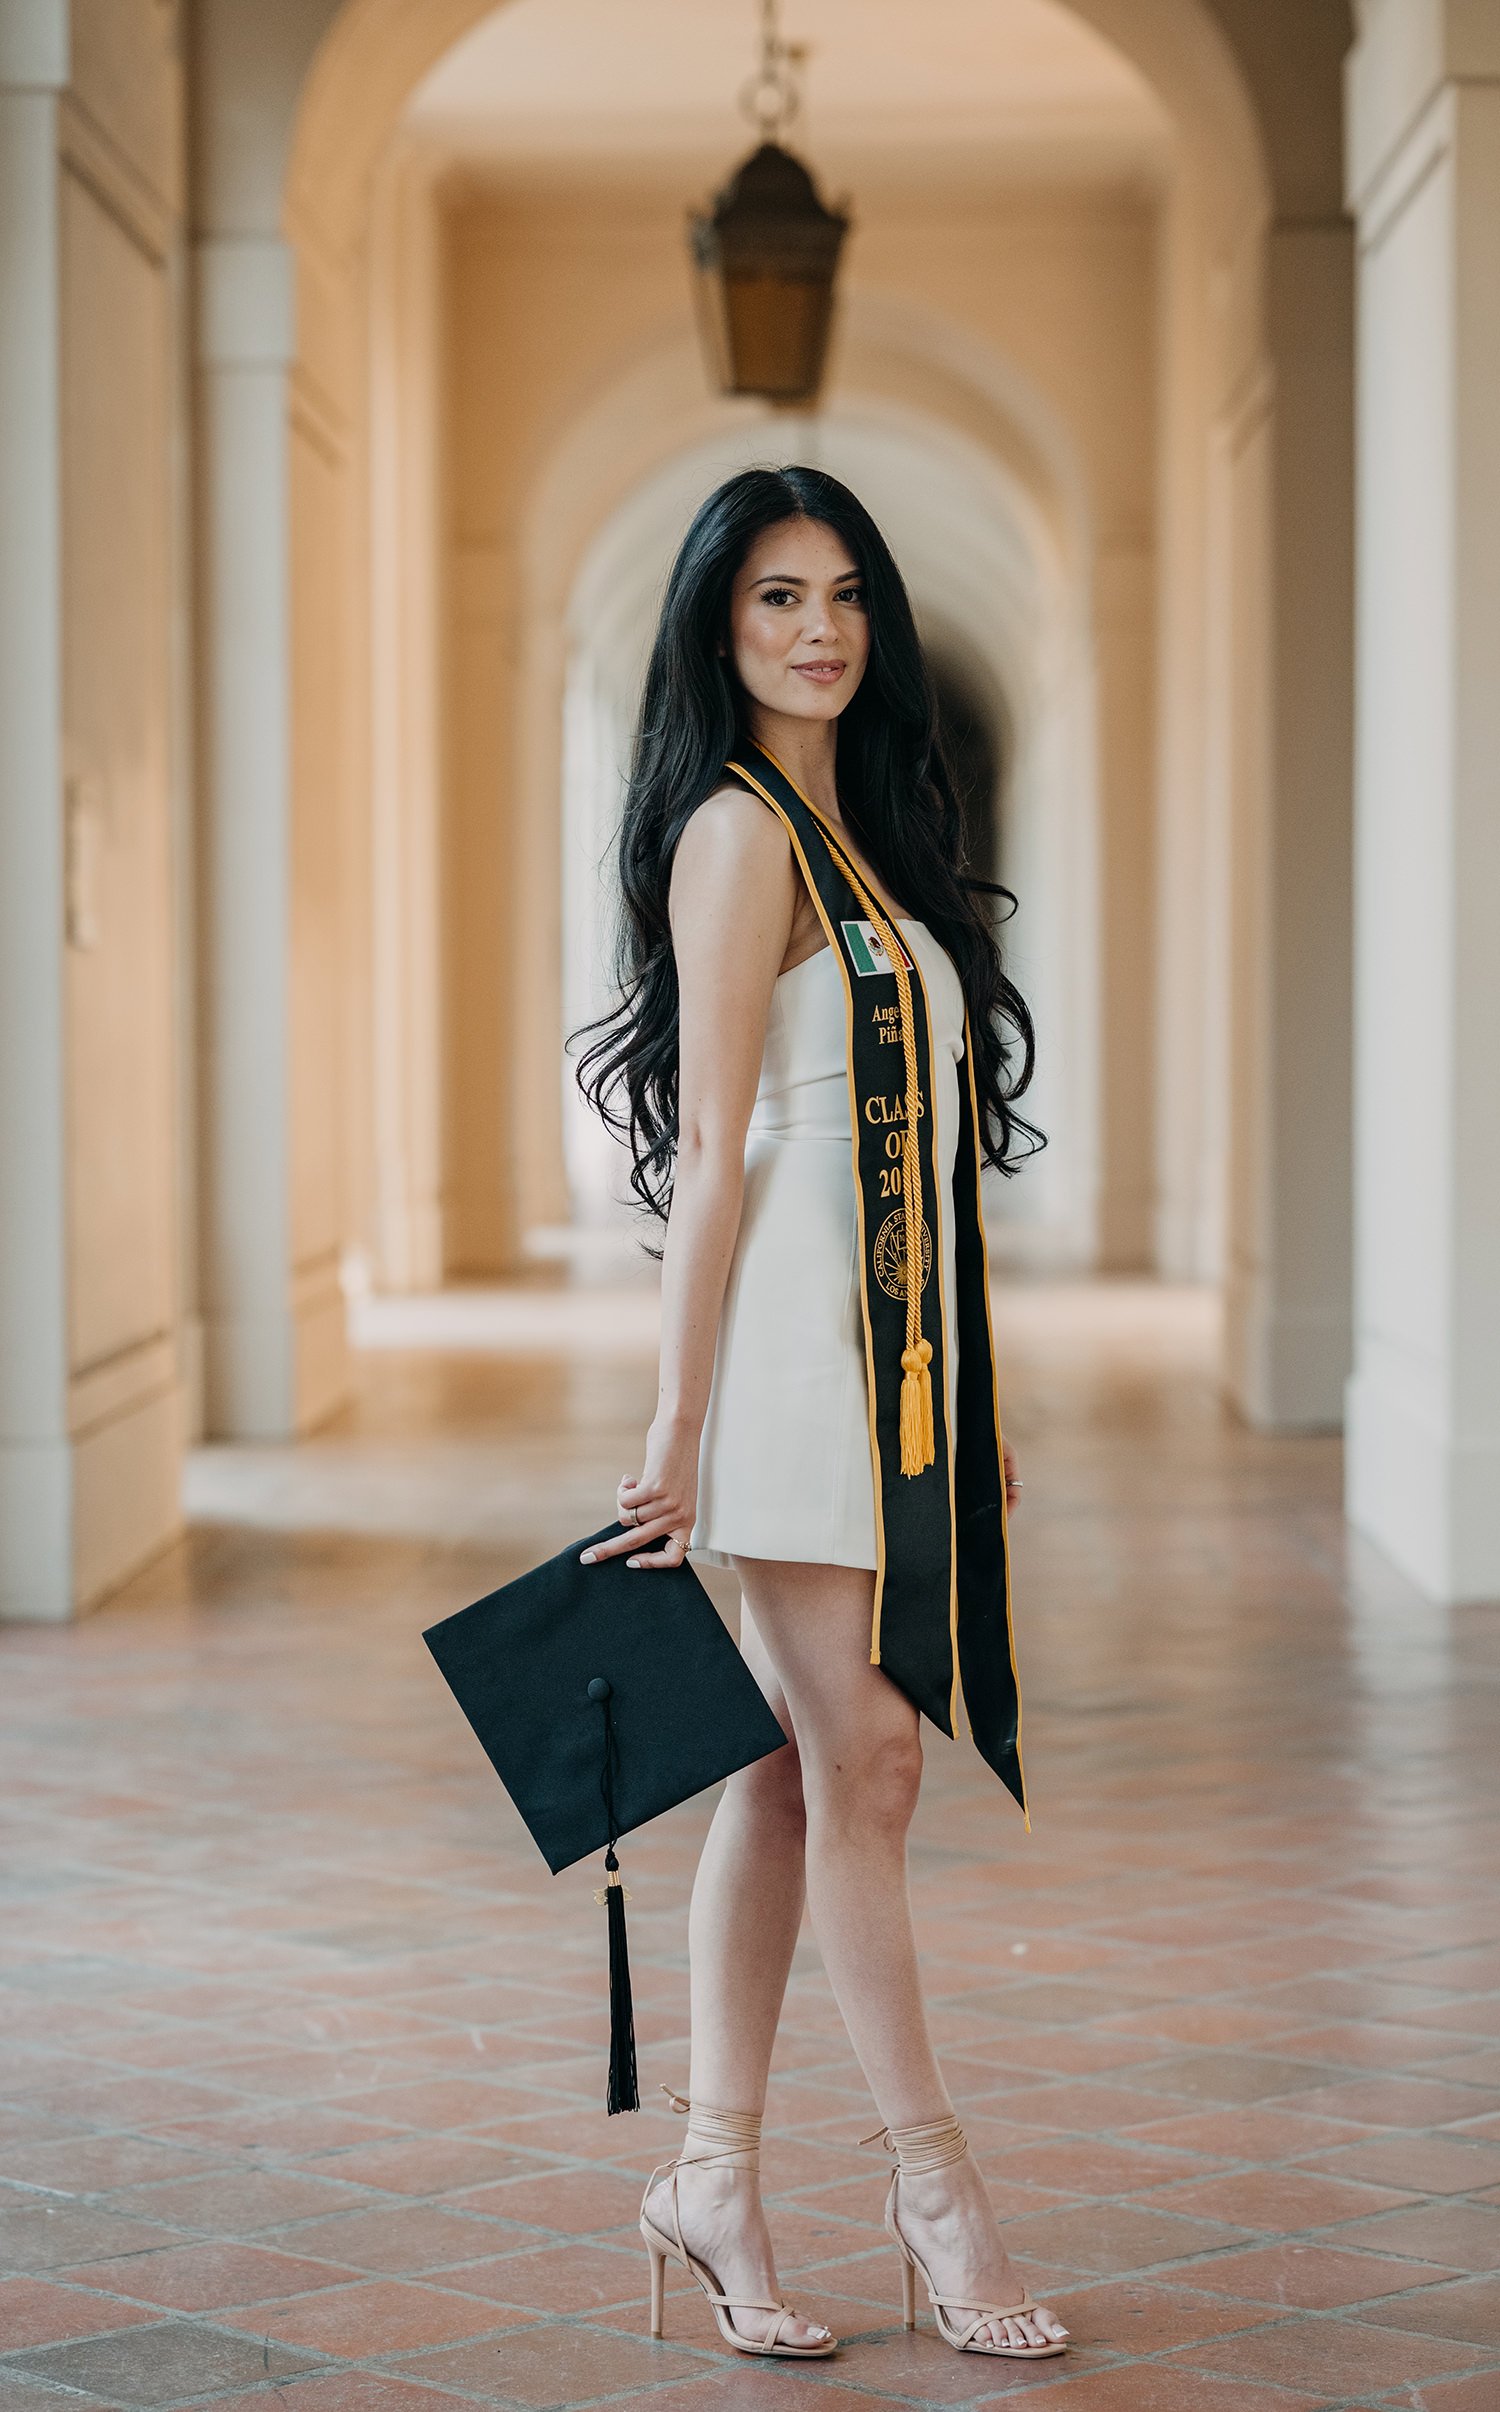 LosAngeles-Graduation-Portrait-Photographer-Pasadena-City-Hall-2.jpg